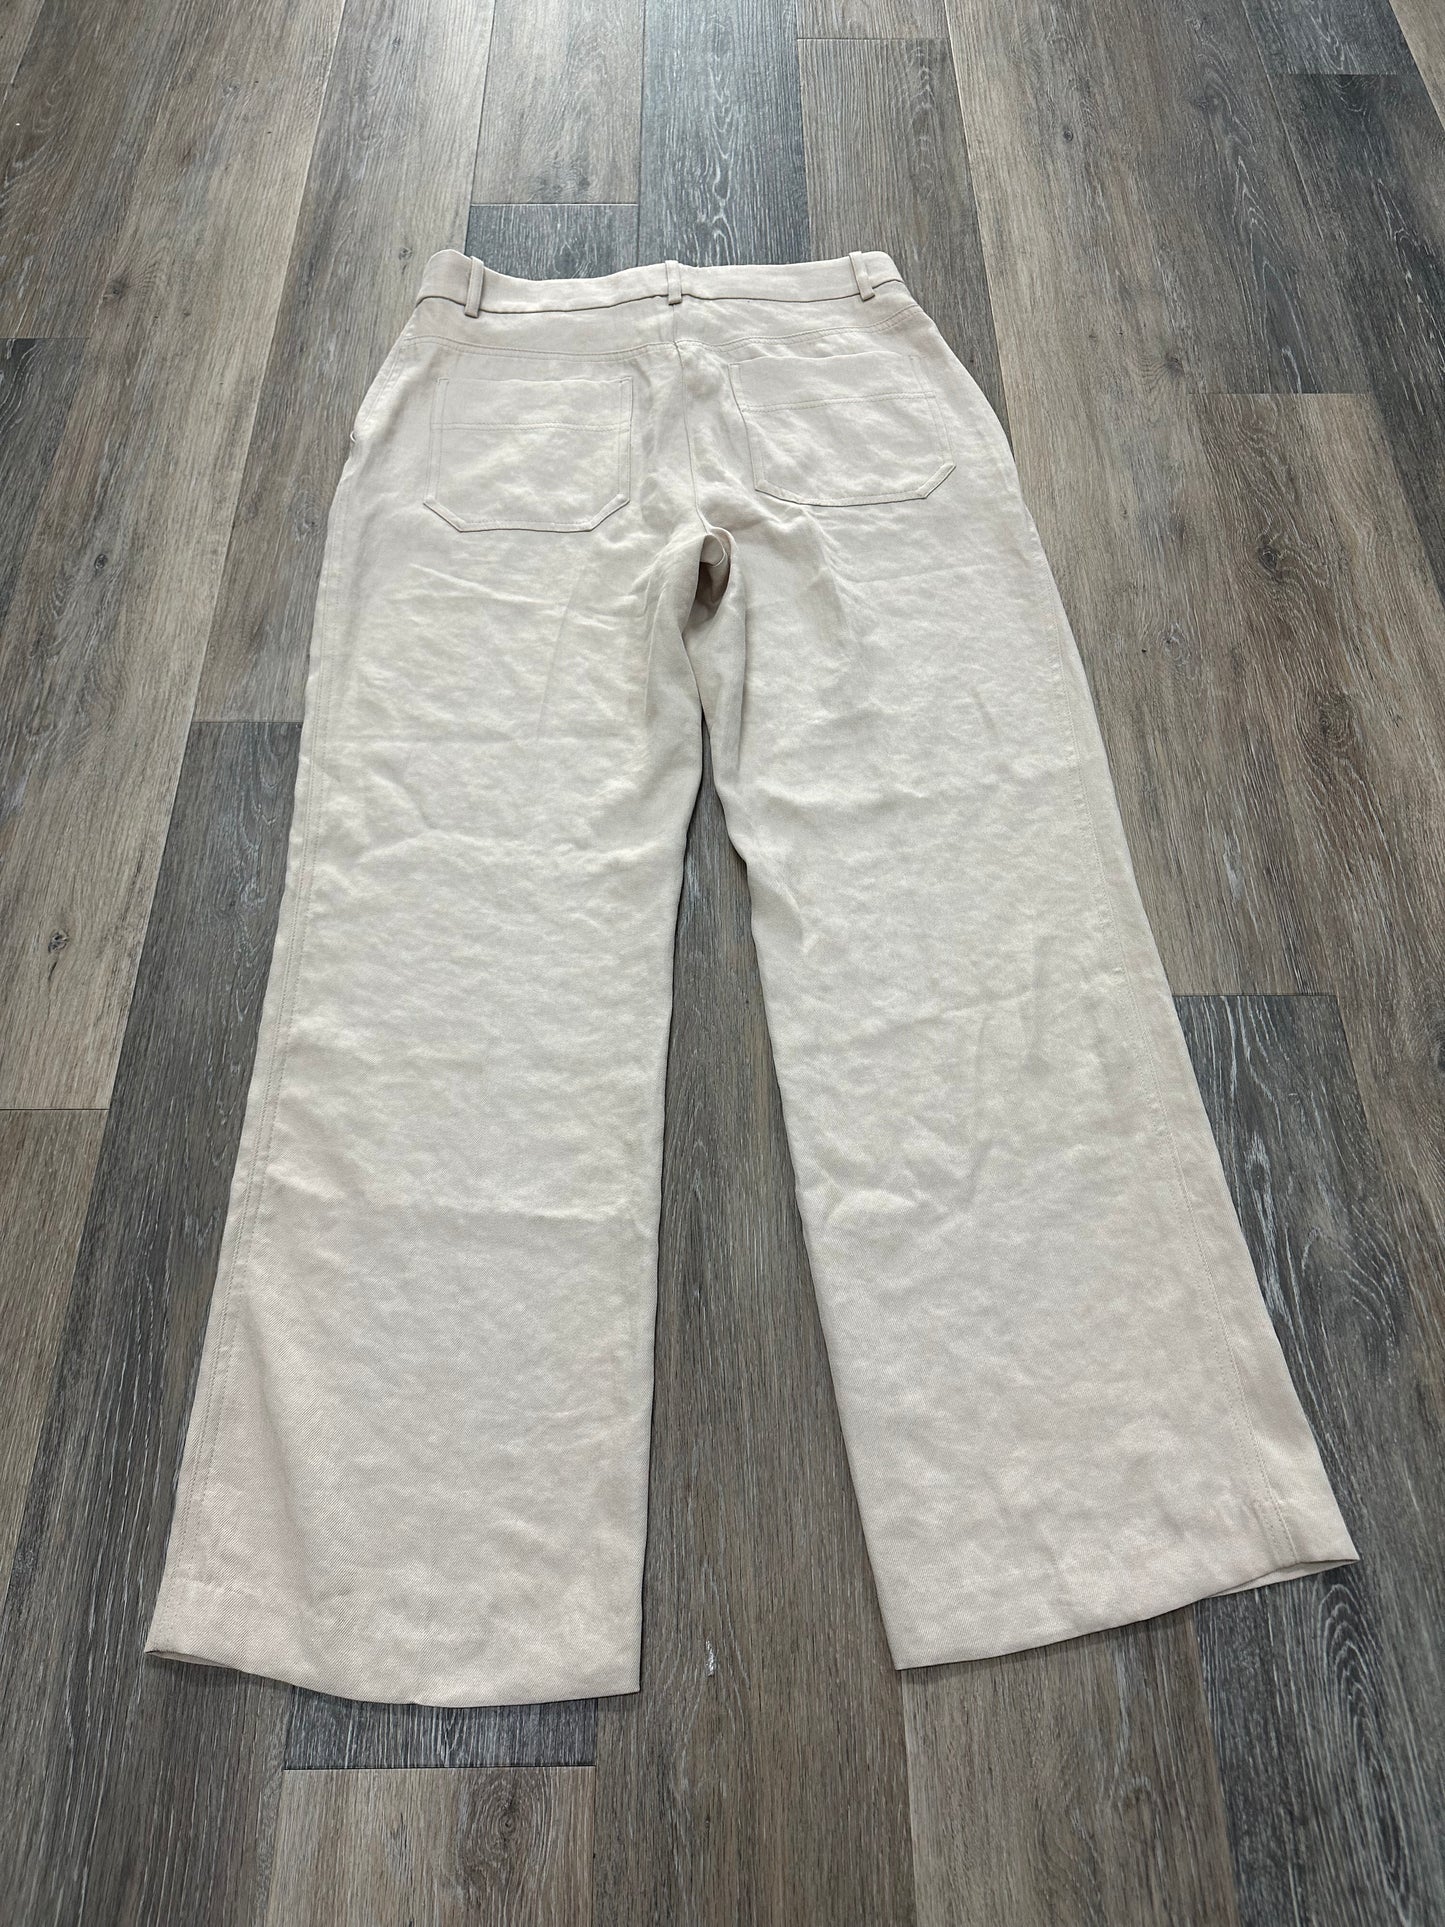 Pants Linen By H&m  Size: 12